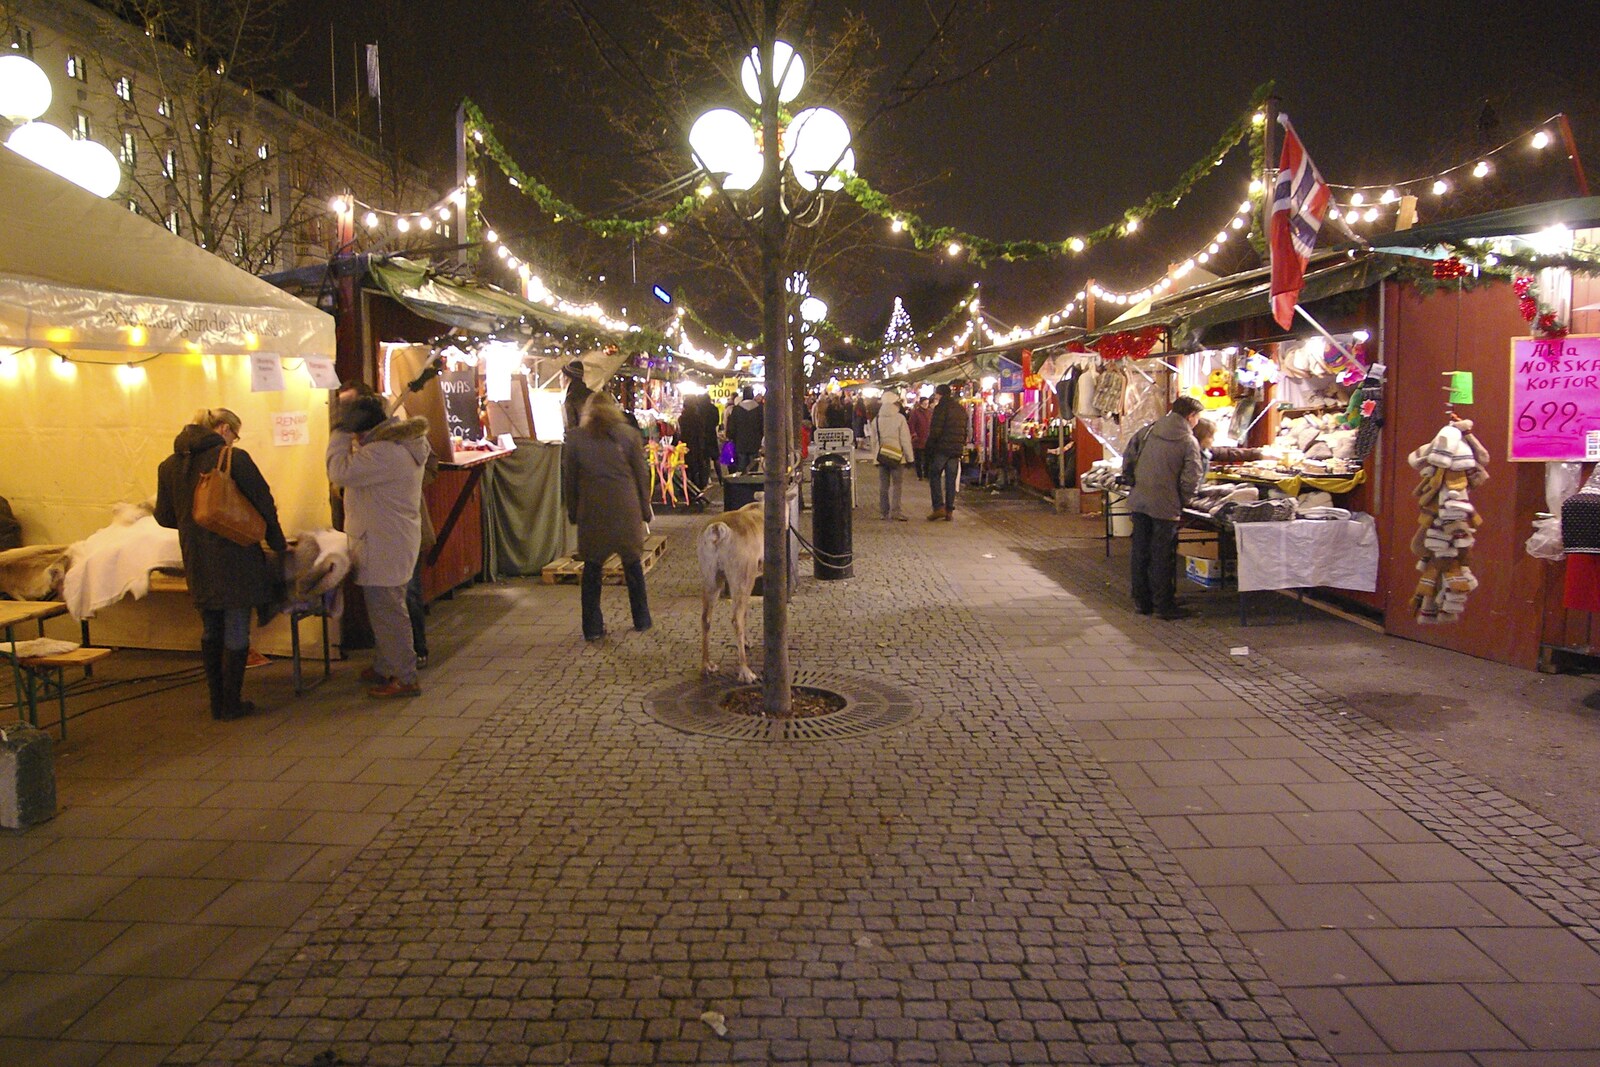 Night market from Gamla Stan, Stockholm, Sweden - 15th December 2007